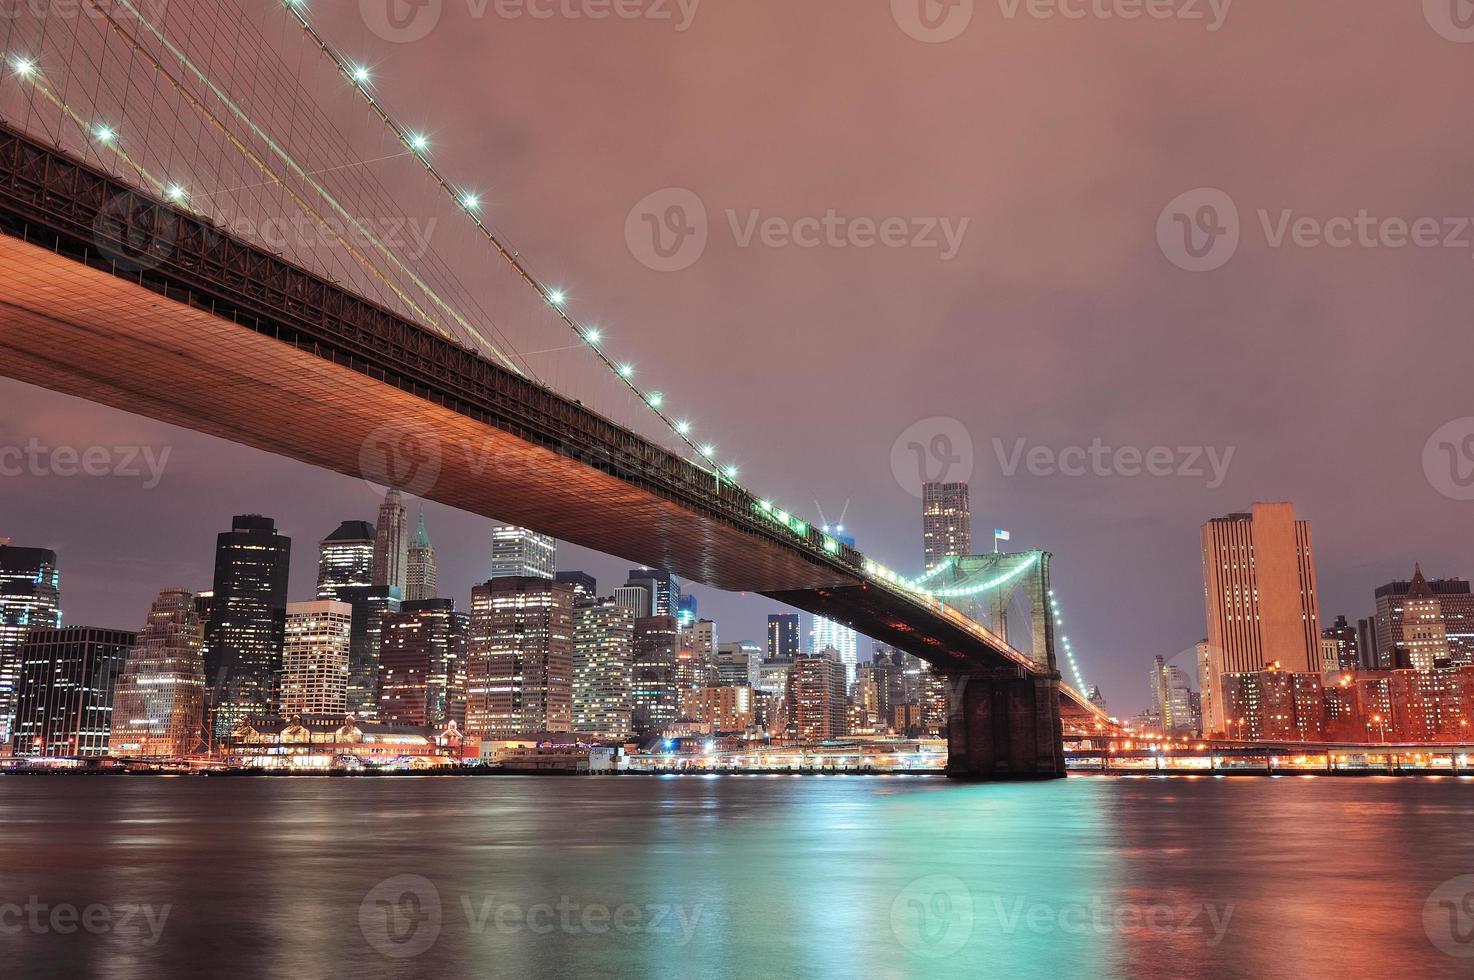 ponte di Brooklyn a New York City foto